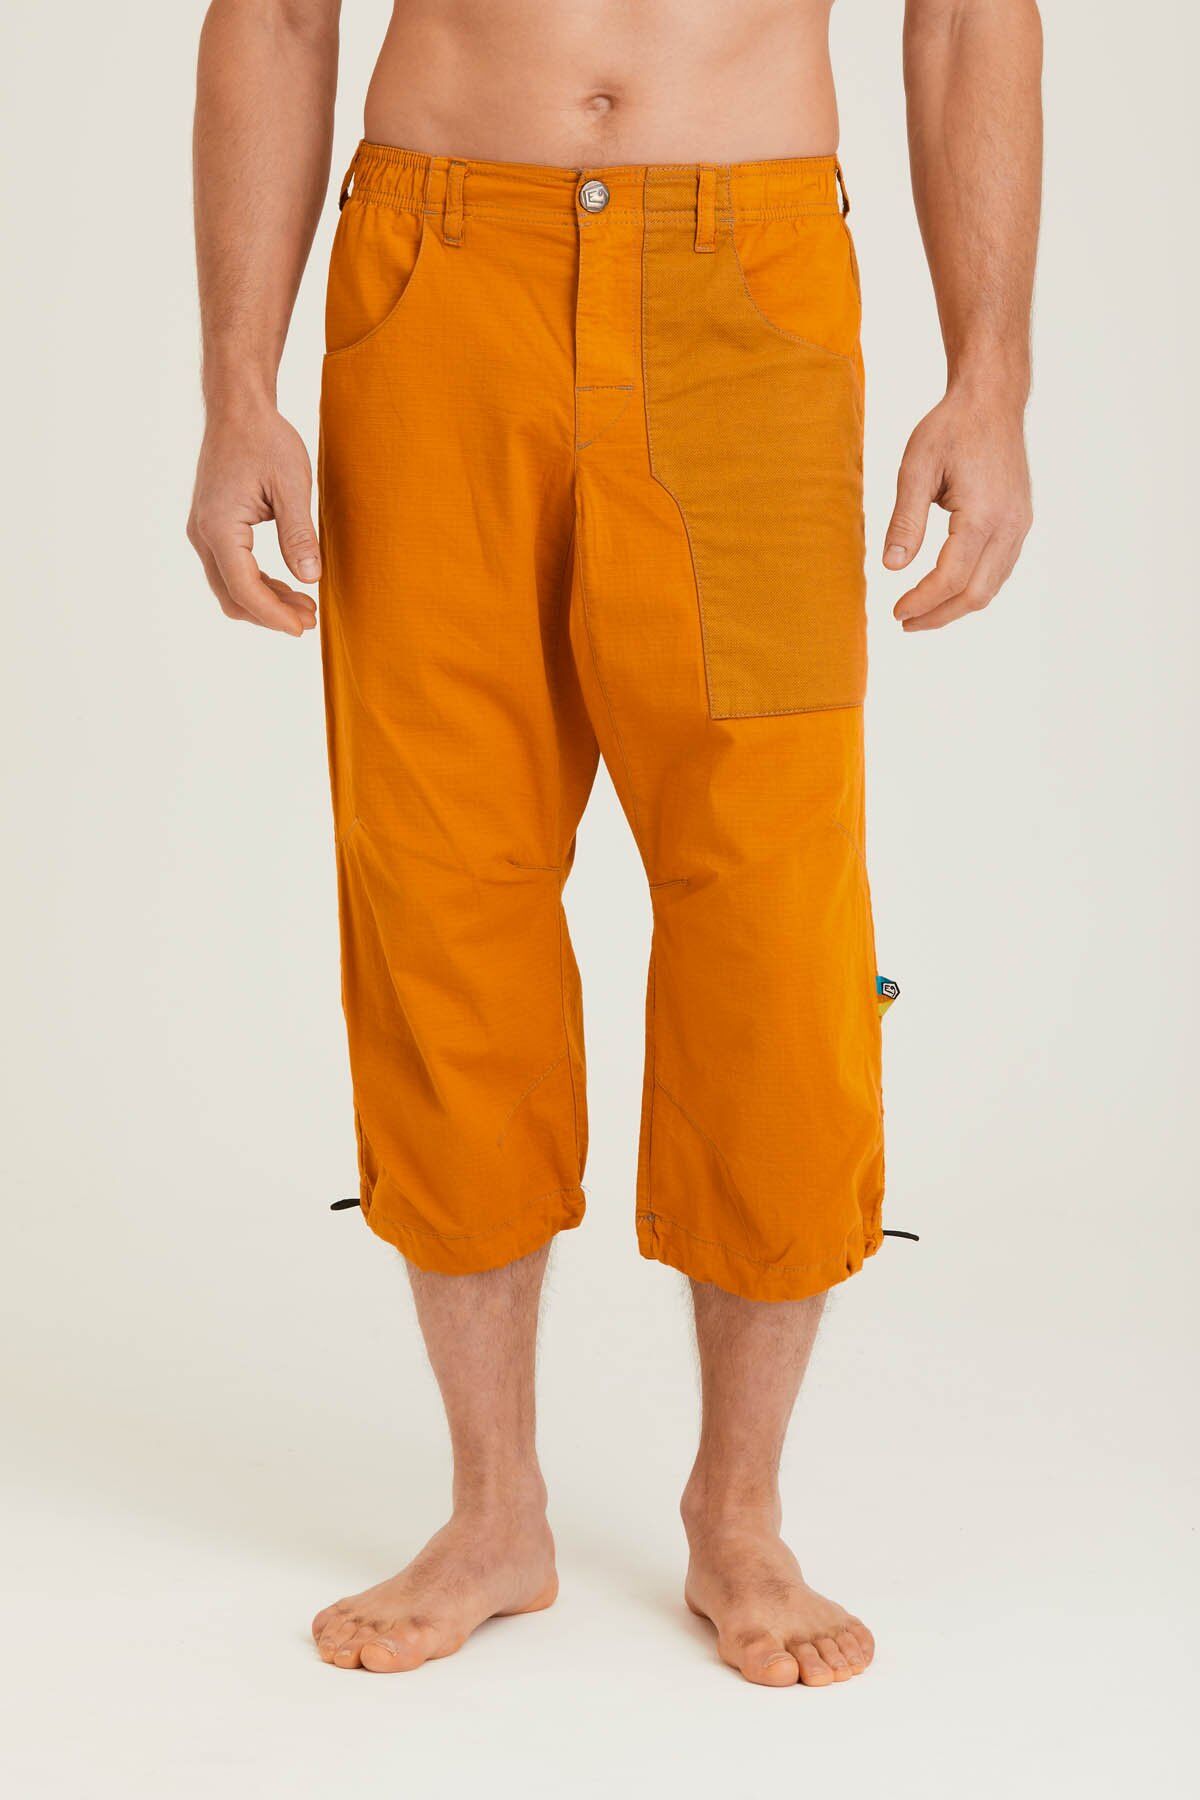 E9 N Fuoco - Shorts - Men's